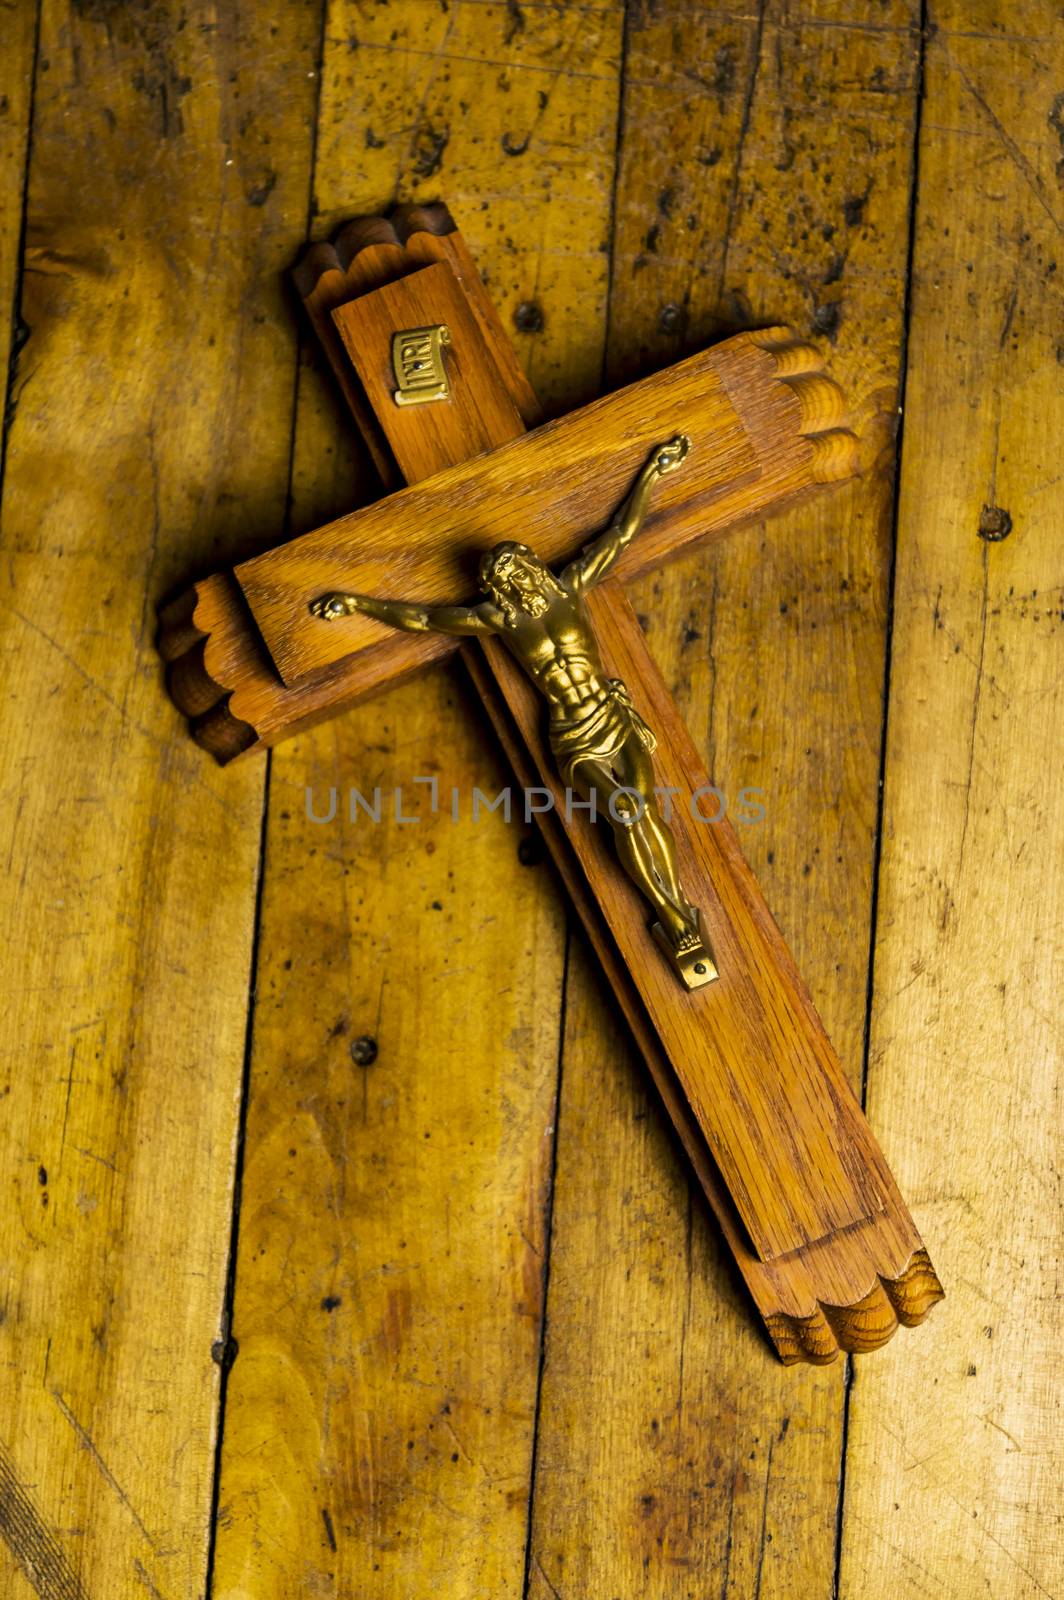 Jesus on the cross isolated on wooden floor